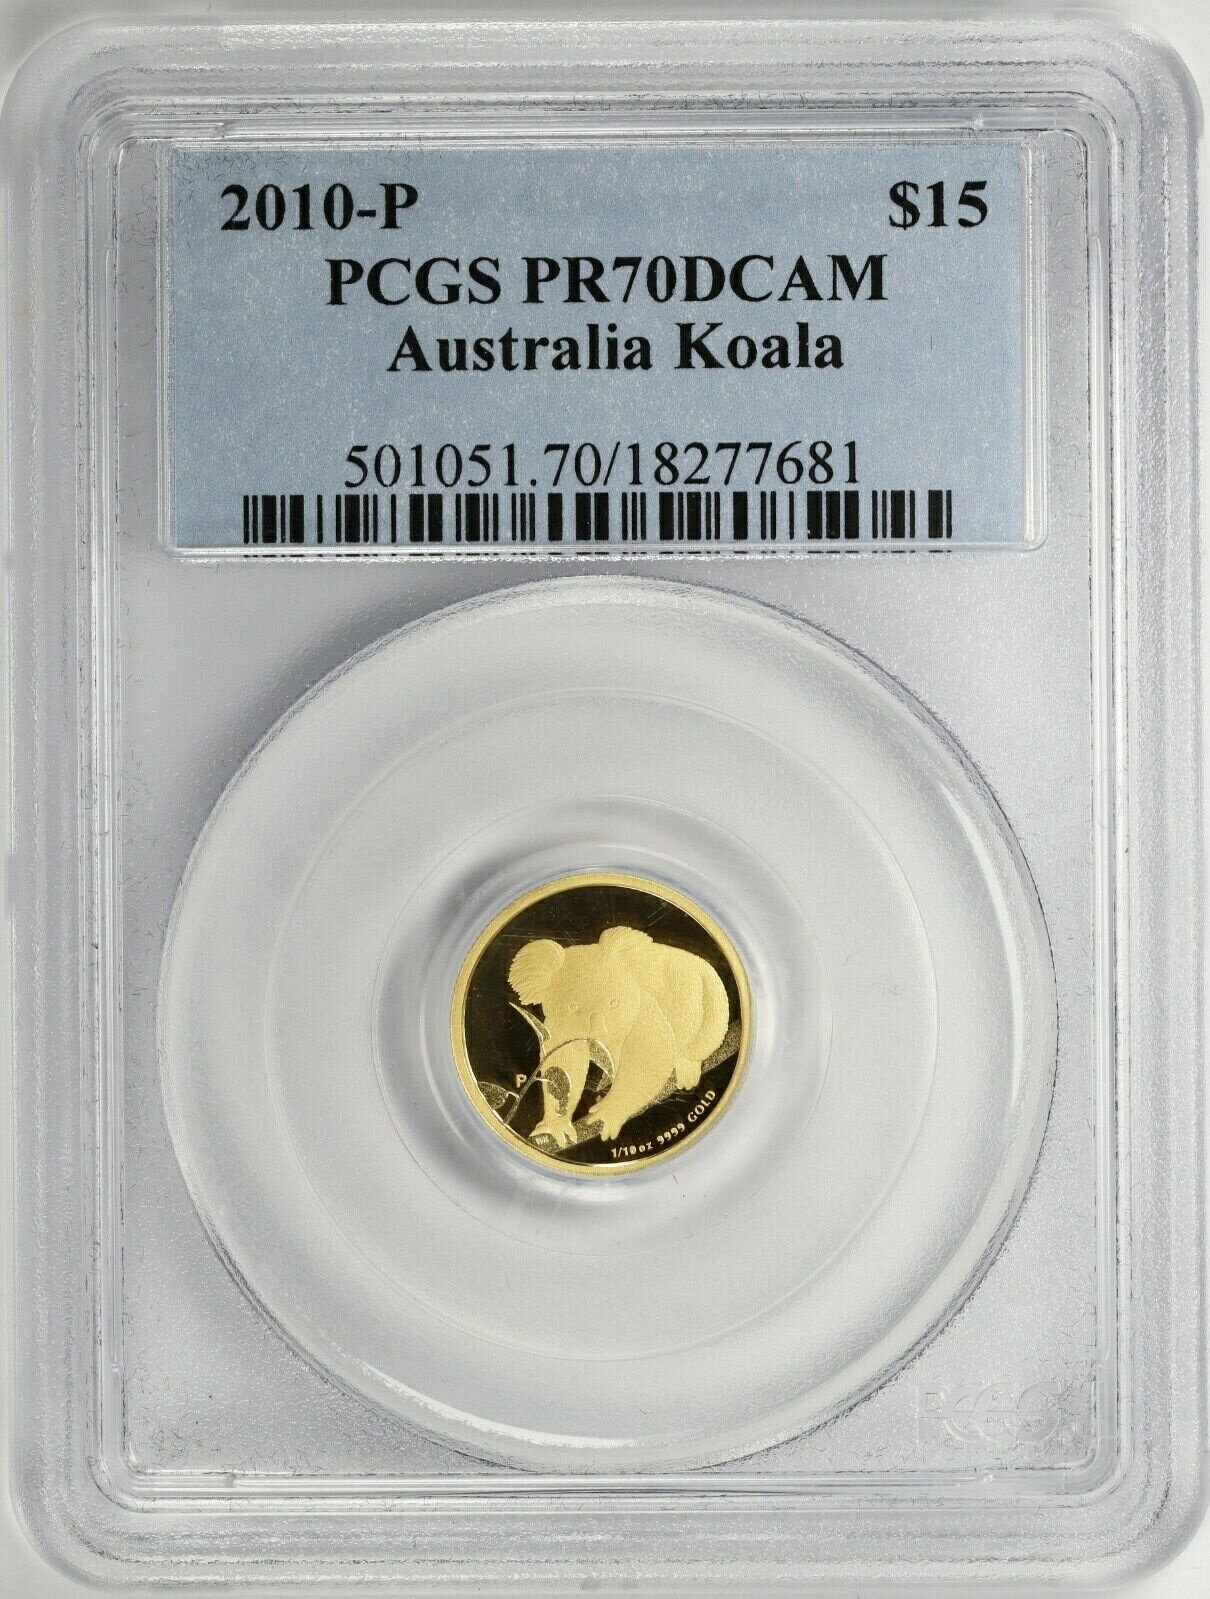 yɔi/iۏ؏tz AeB[NRC RC   [] 2010-P Australia 1/10oz Gold Koala Proof PCGS PF70 DCAM Deep Cameo $15